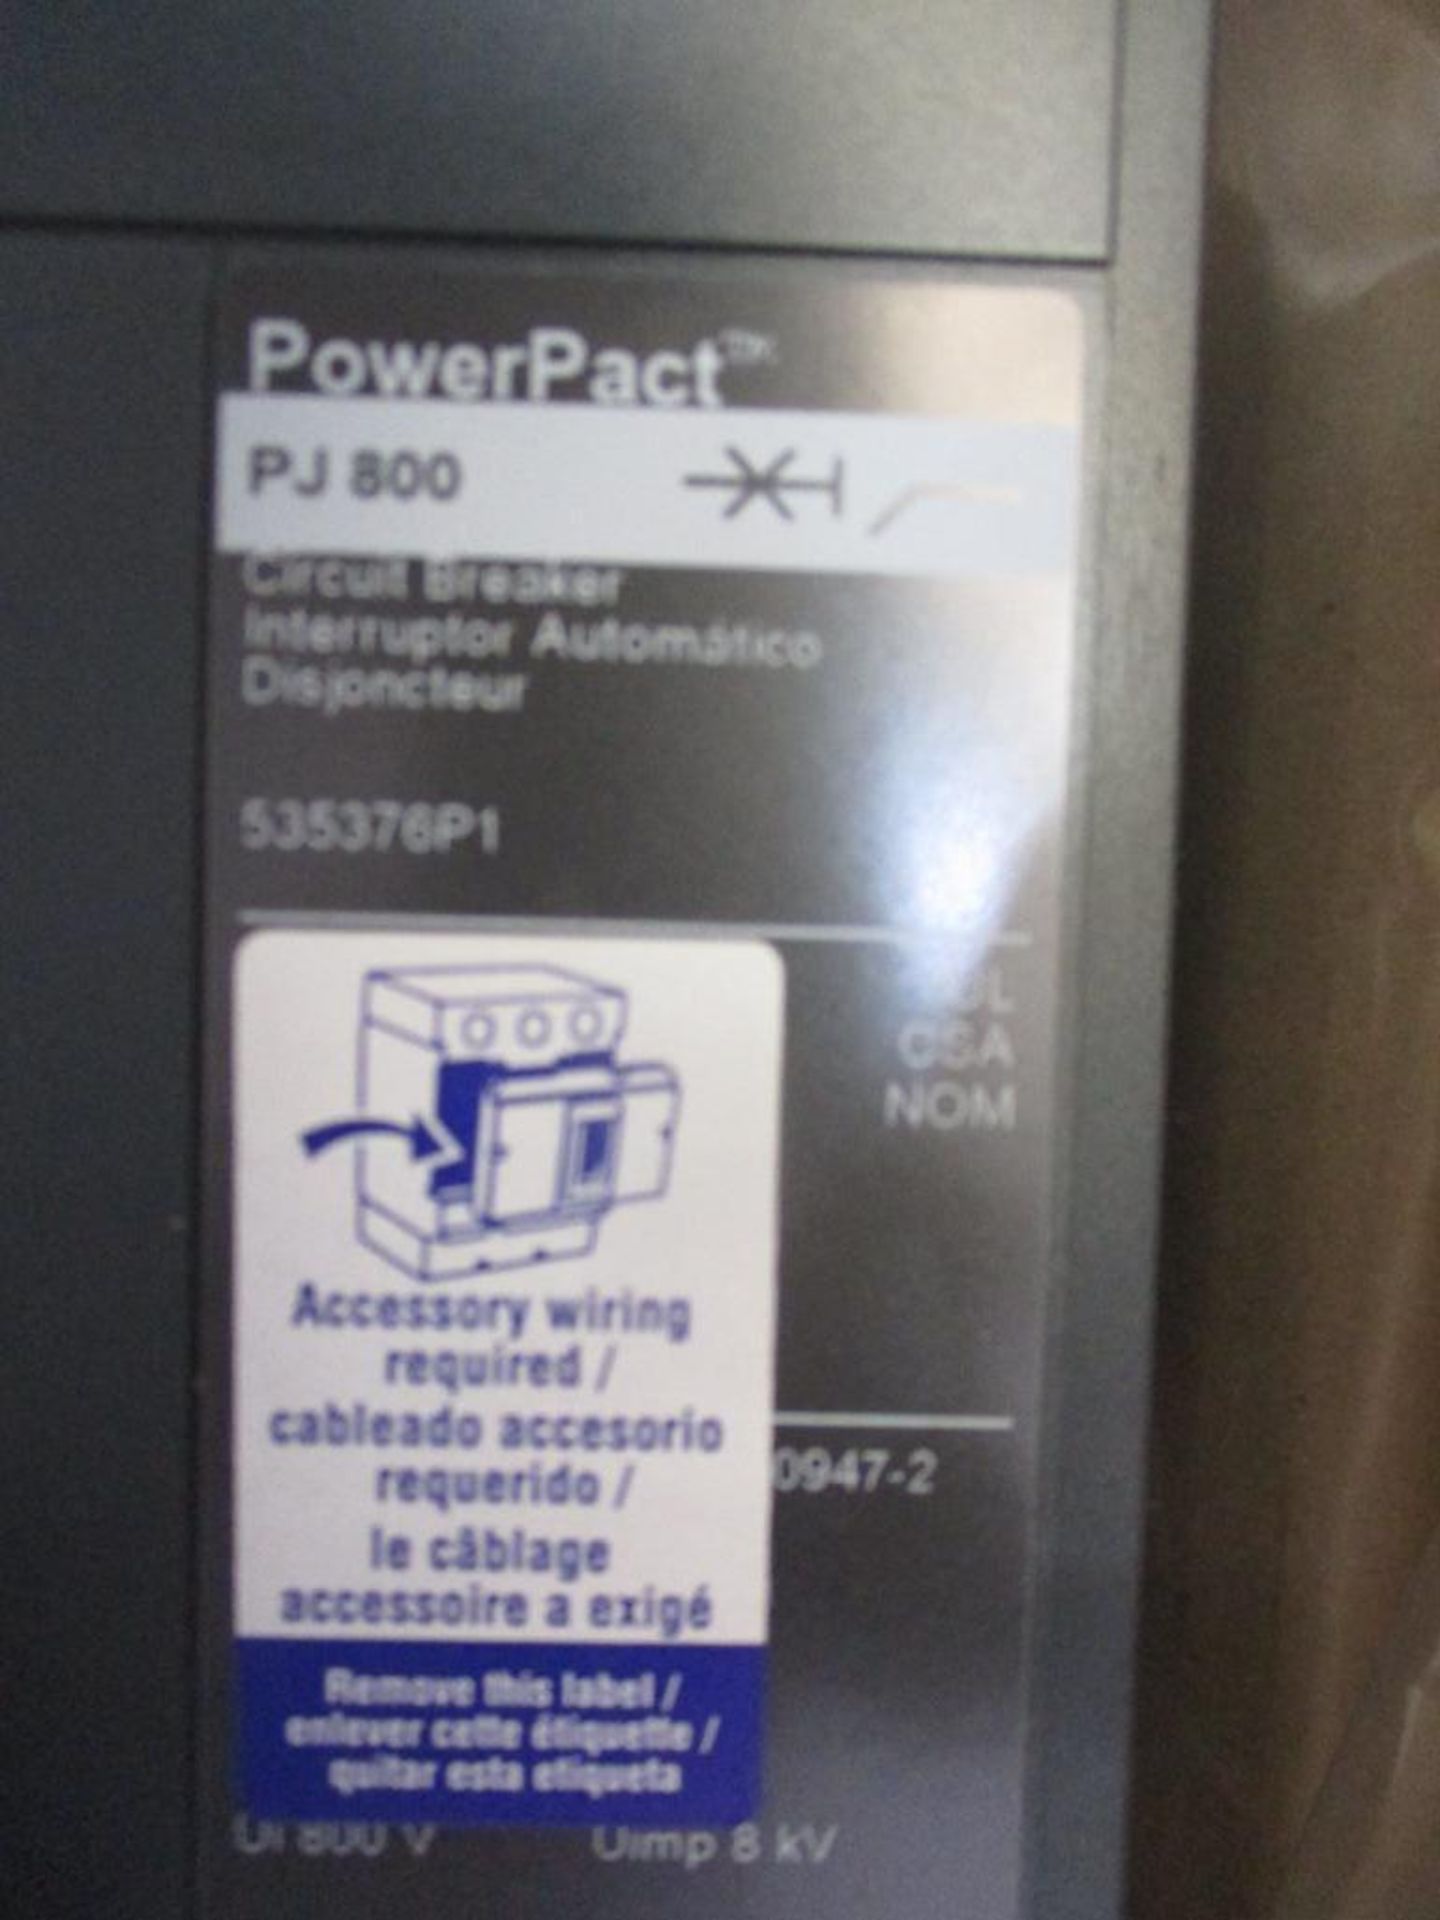 Square D 800 AMP Circuit Breaker, 53537681, 800A, 3P, 600 VAC, Mod. PJ 800 (New in Box) - Image 2 of 4